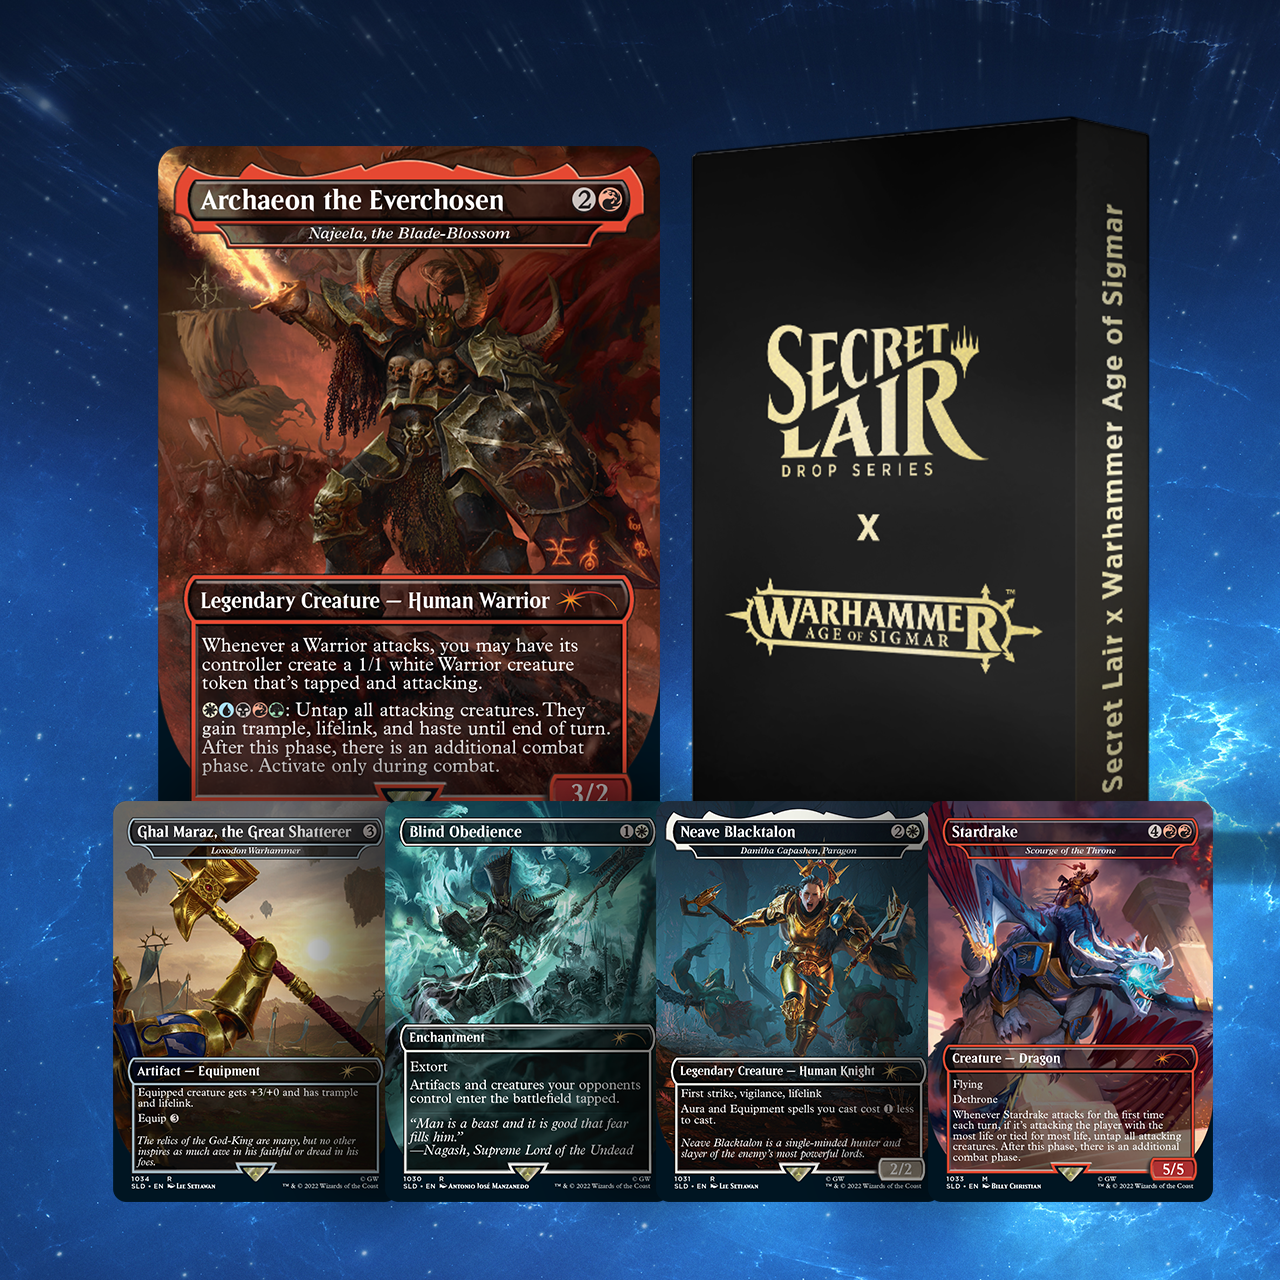 Secret Lair Drop Series: Warhammer Age of Sigmar